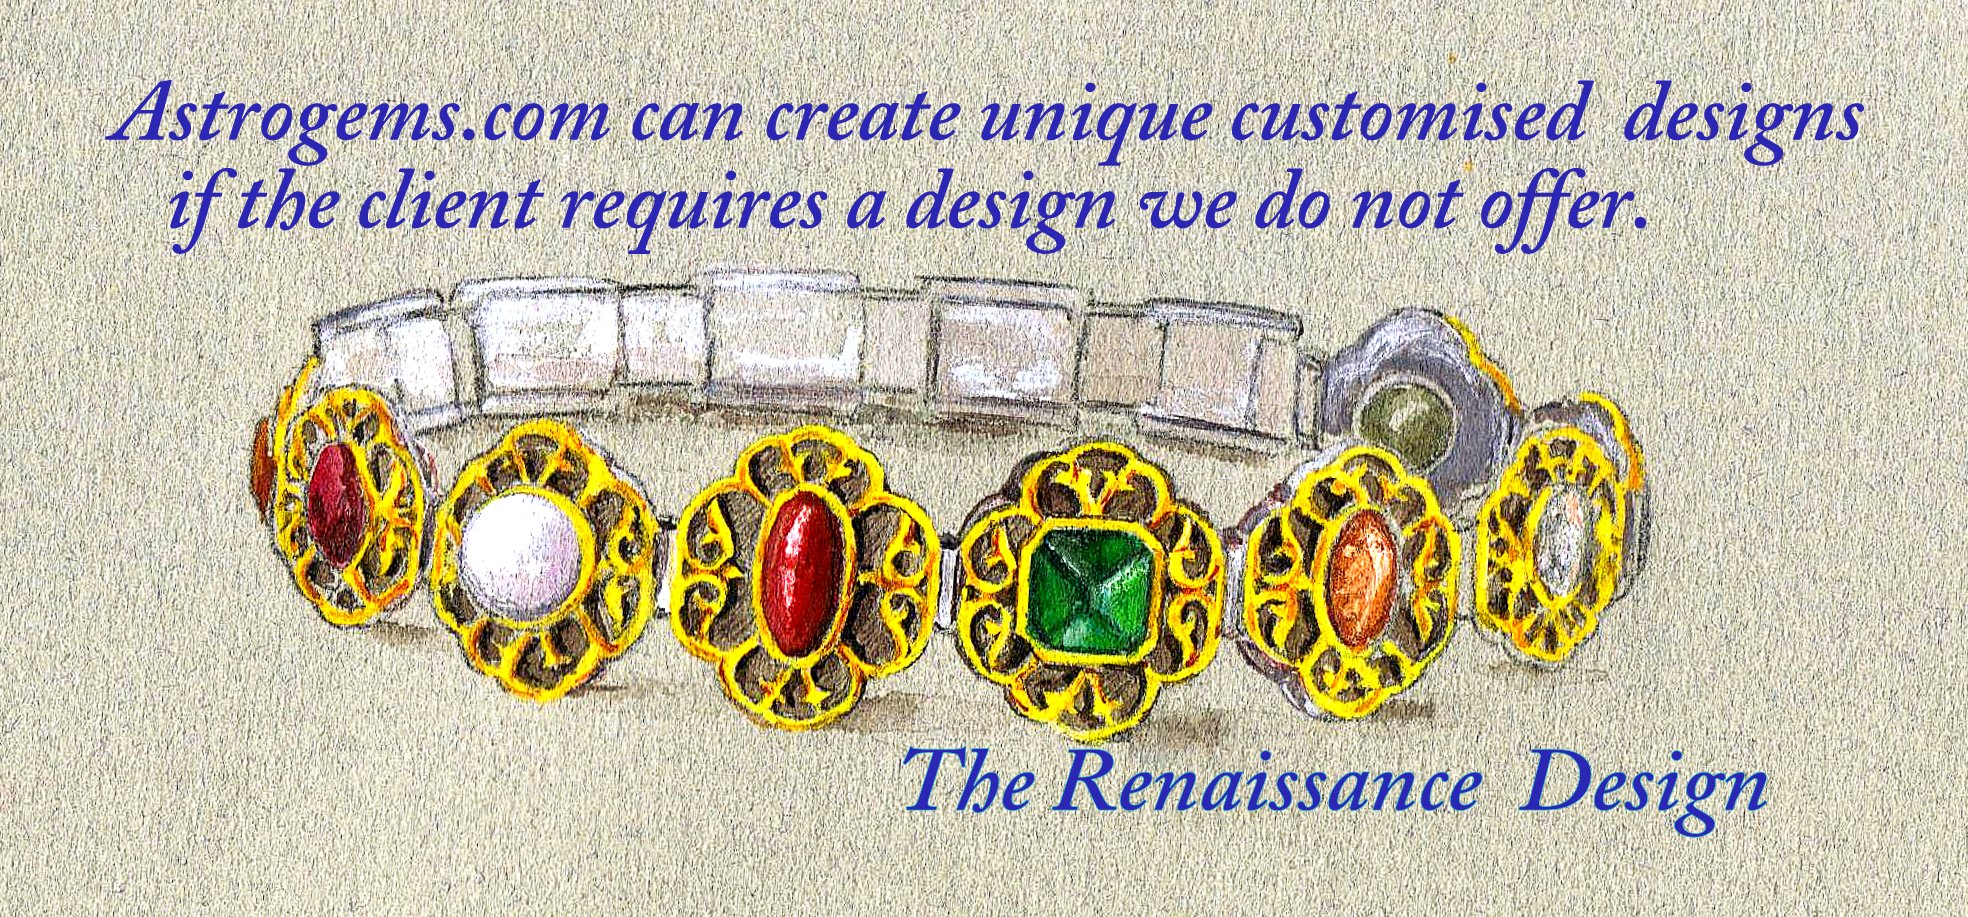 custom vedic astrological bangles and bracelets by Astrogems.com